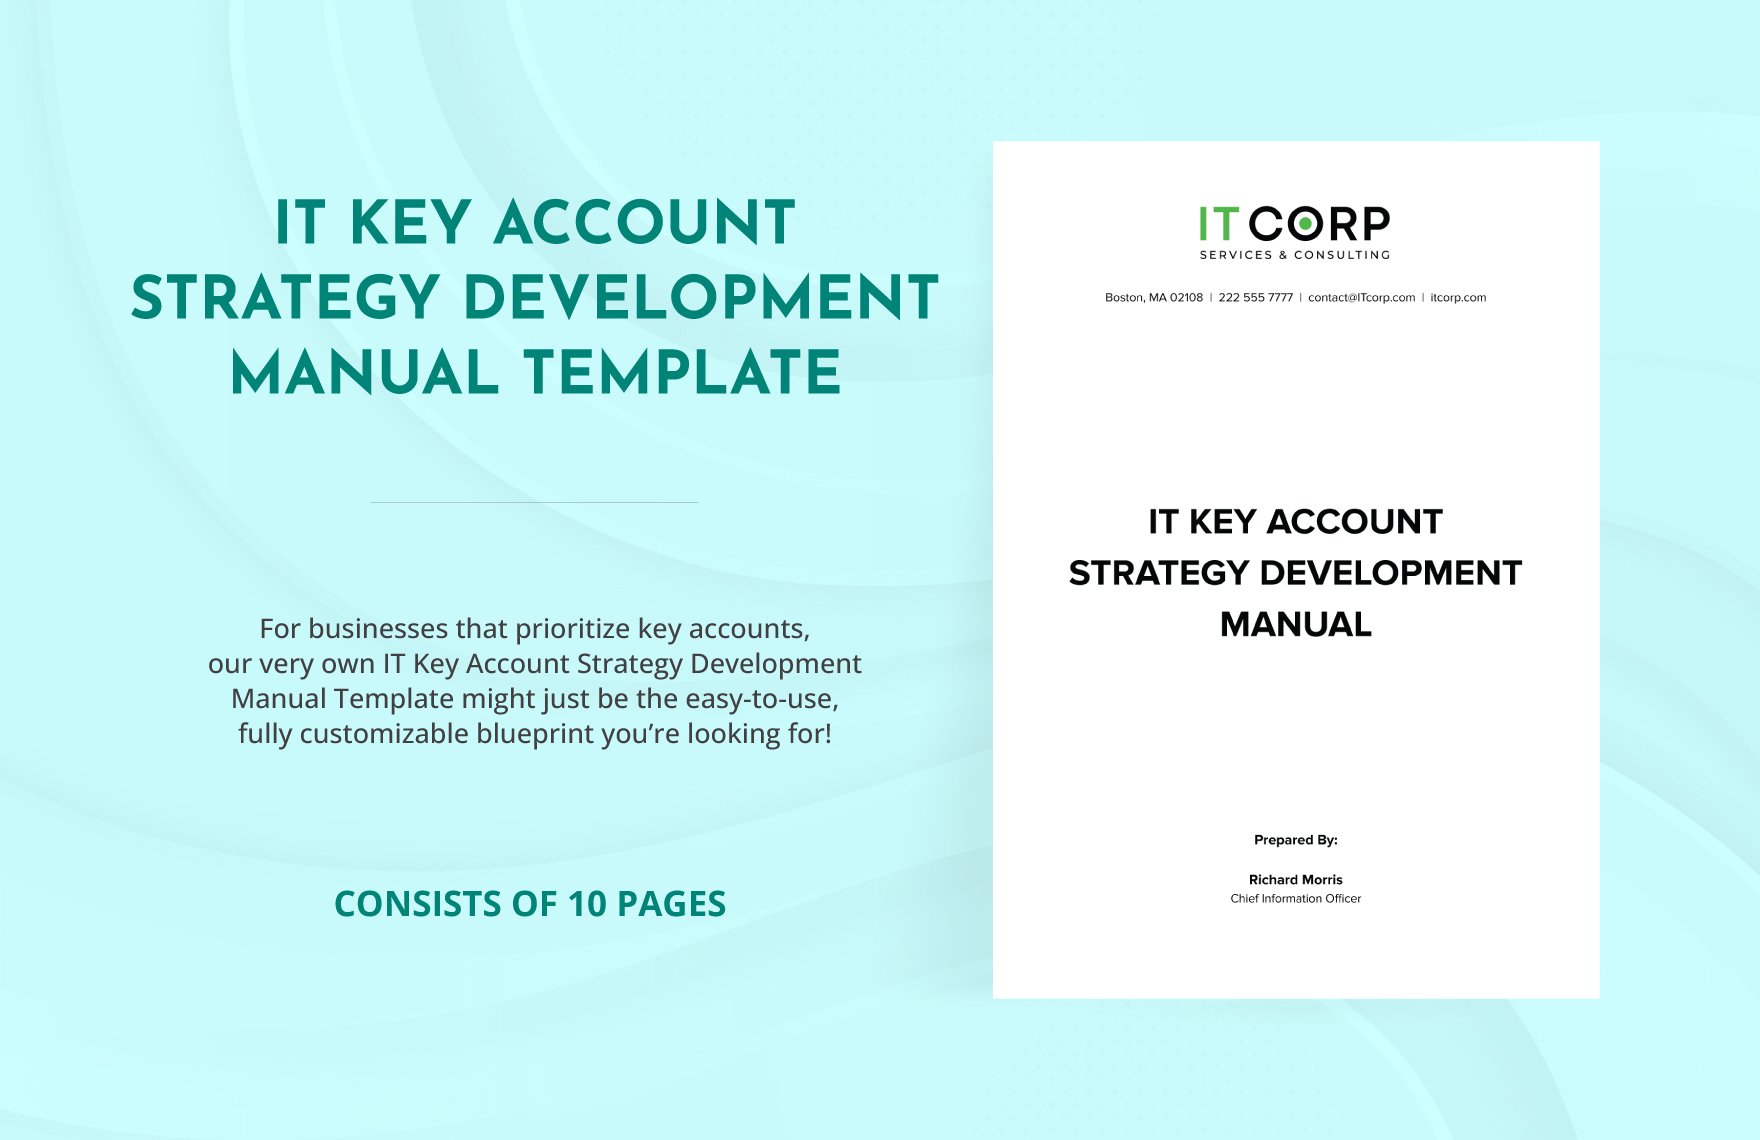 IT Key Account Strategy Development Manual Template